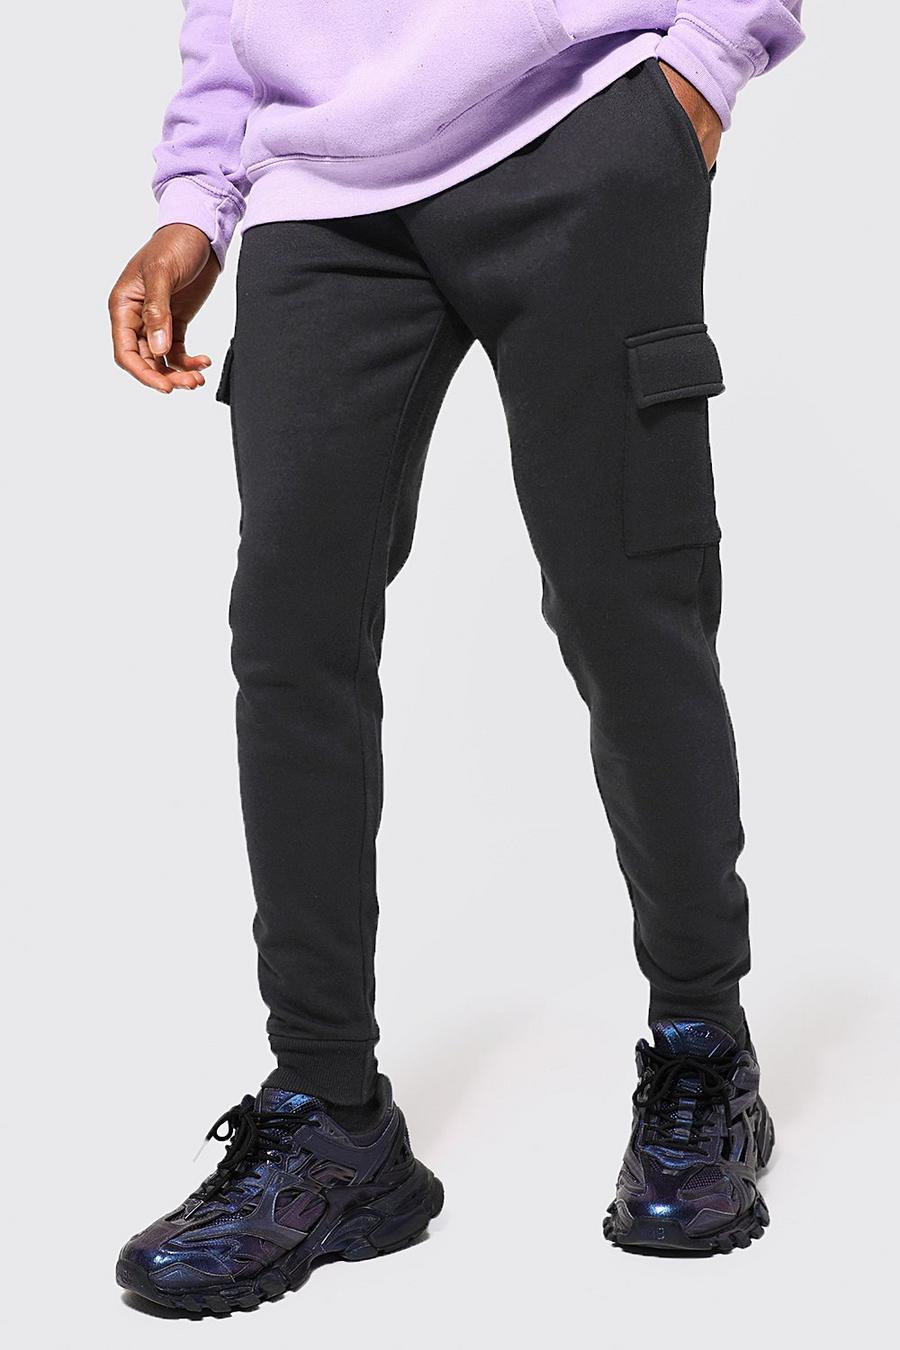 Pantaloni tuta Cargo Skinny Fit in cotone REEL, Black negro